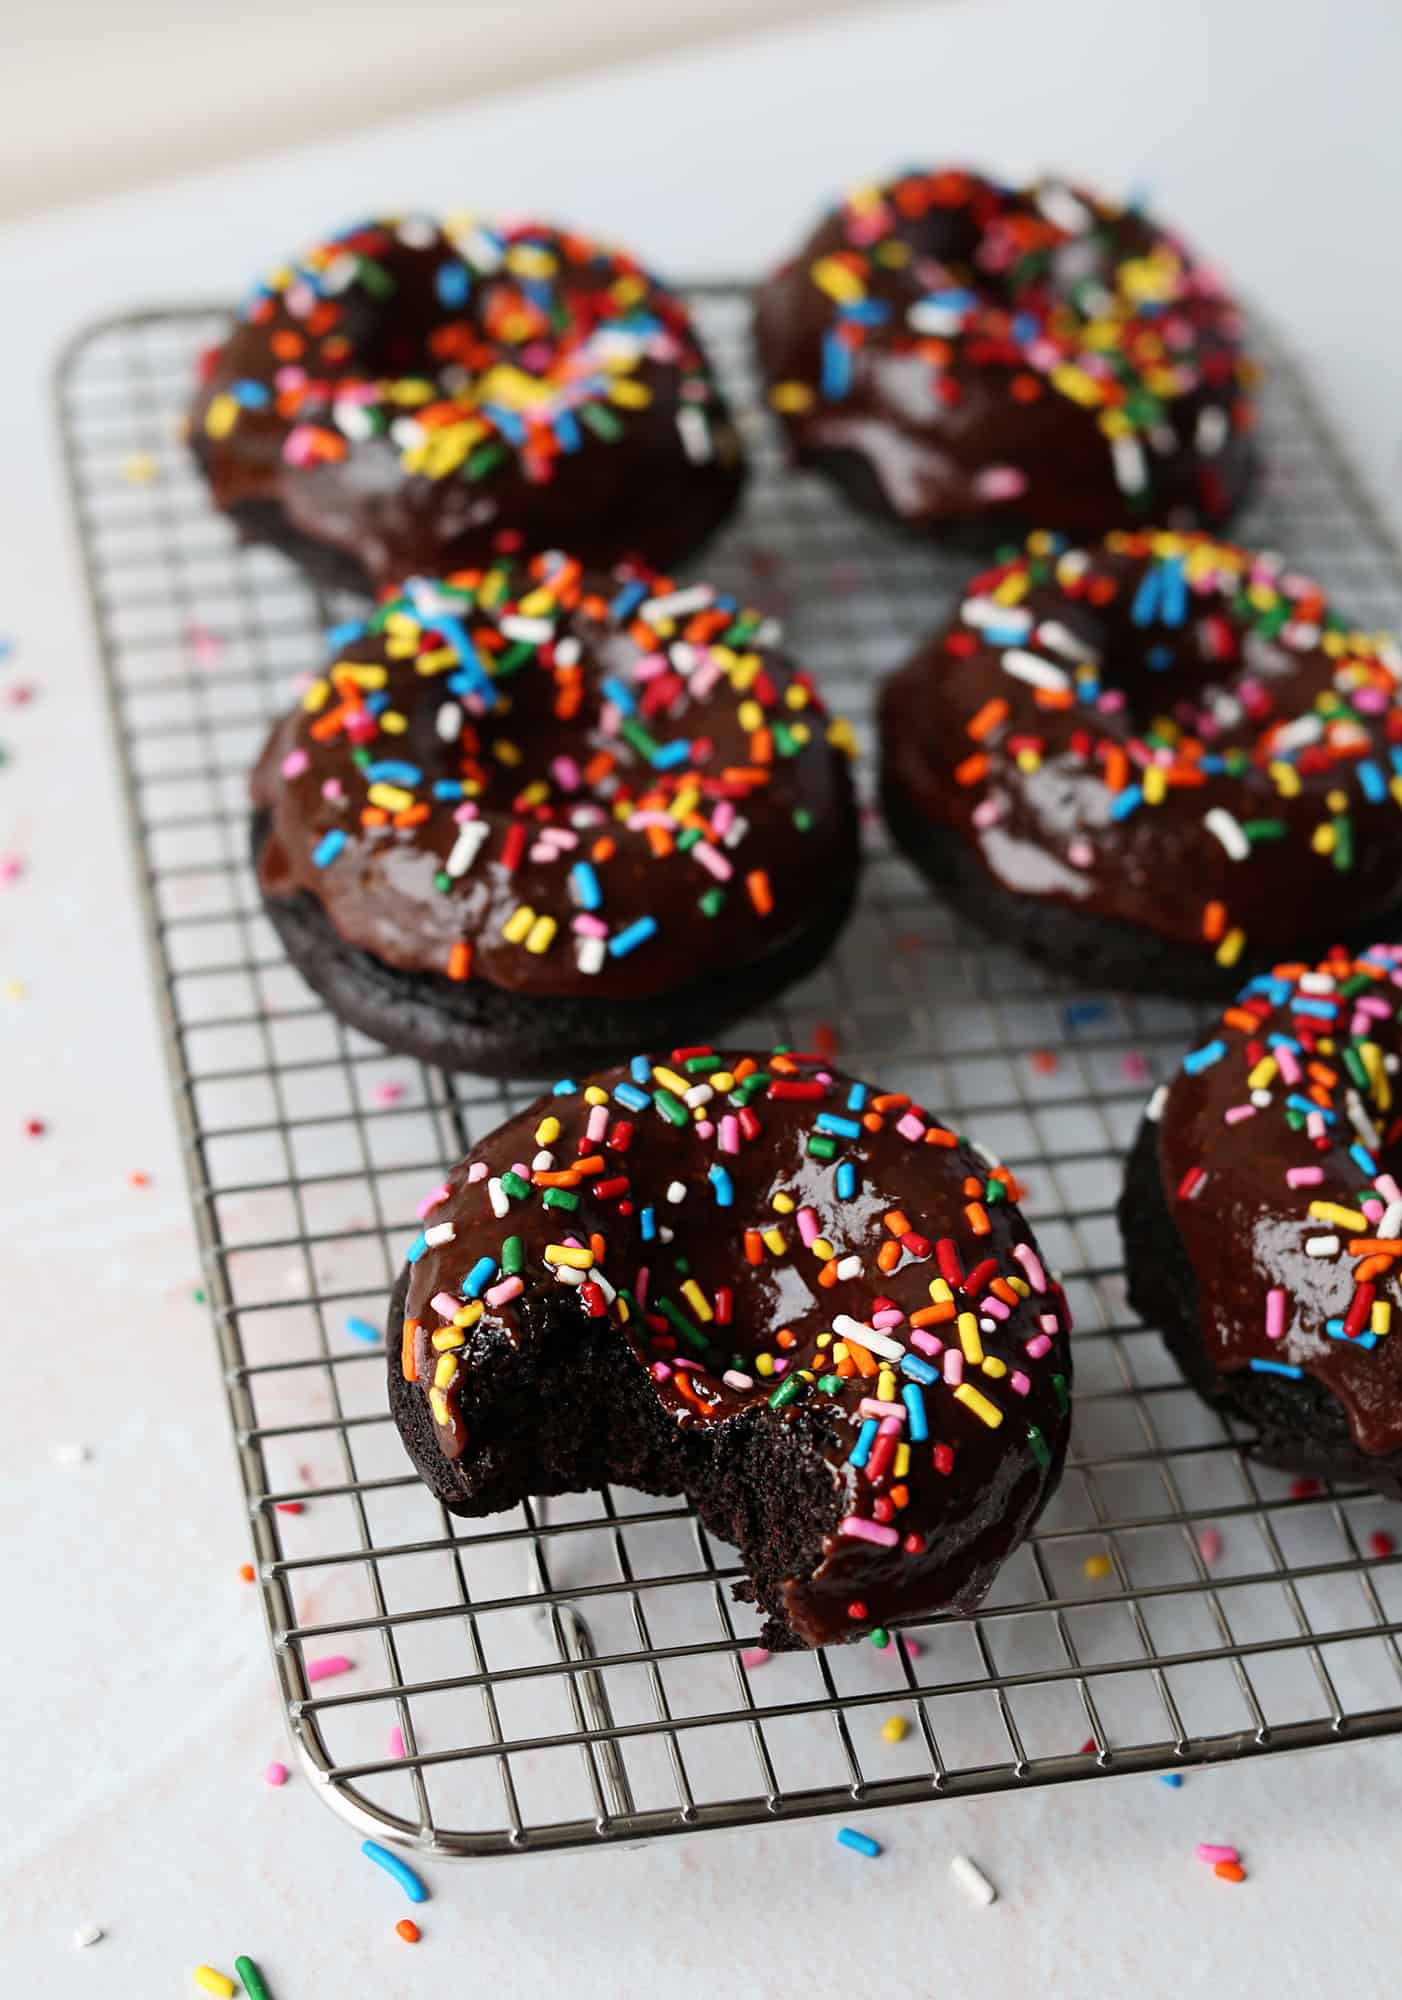 https://abeautifulmess.com/wp-content/uploads/2021/02/chocolate-baked-donuts.jpg